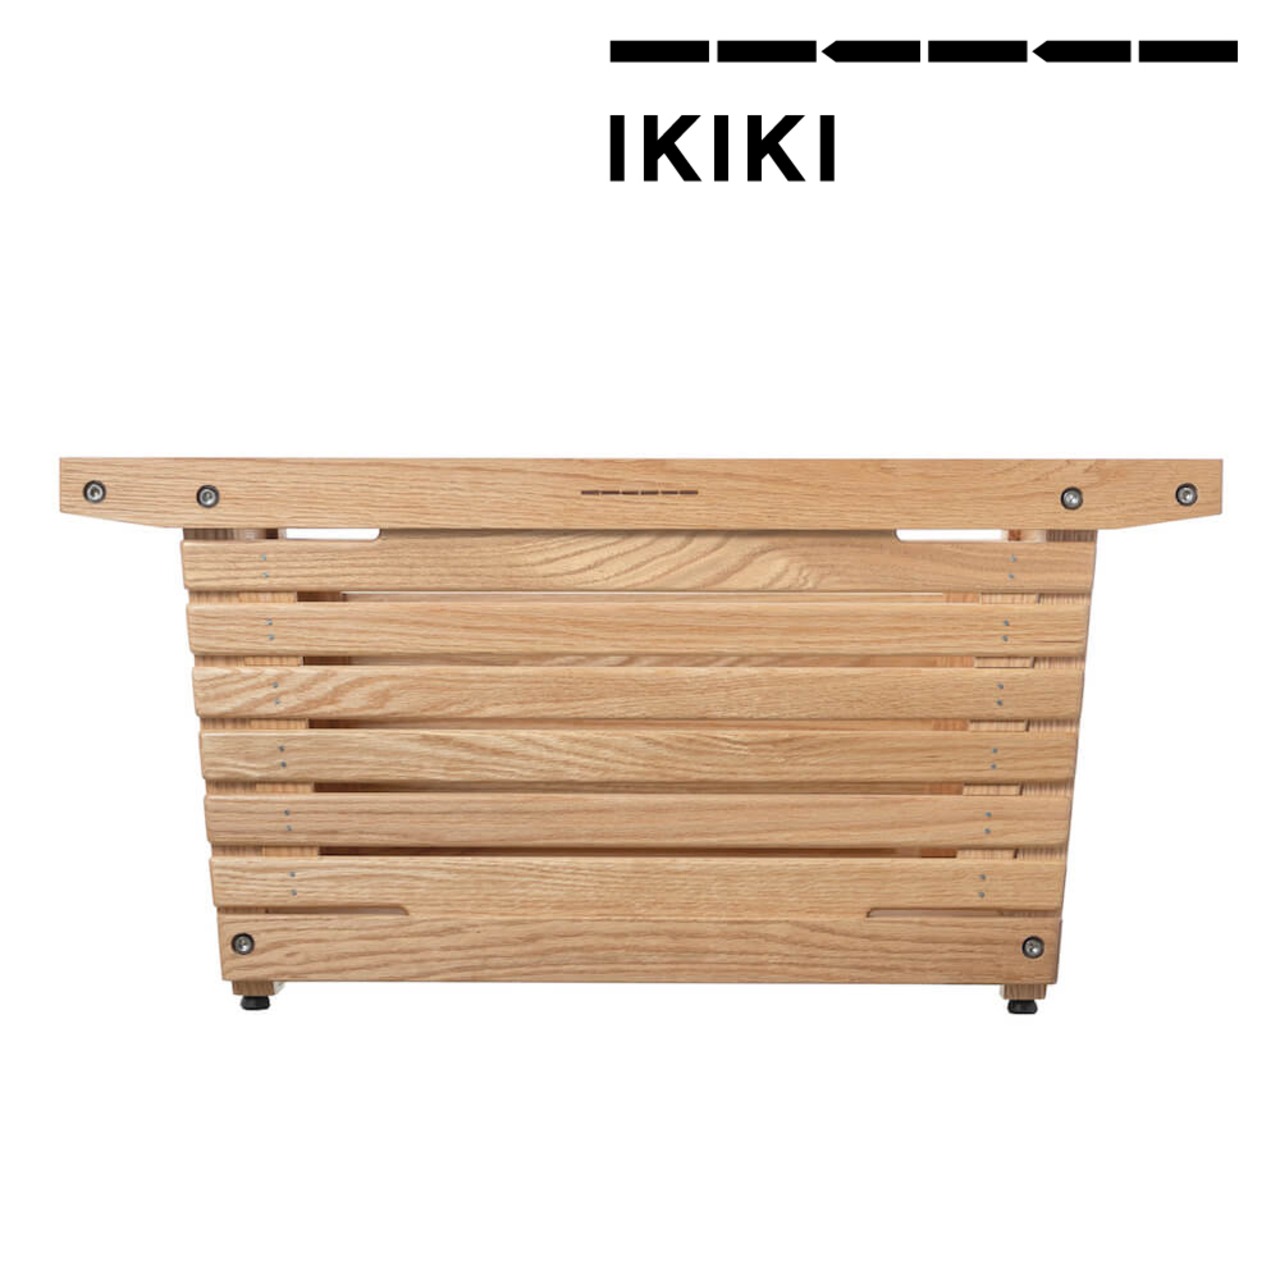 IKIKI(イキキ) シェルフコンテナ Mサイズ オーク 天然木材 木製 機能コンテナ